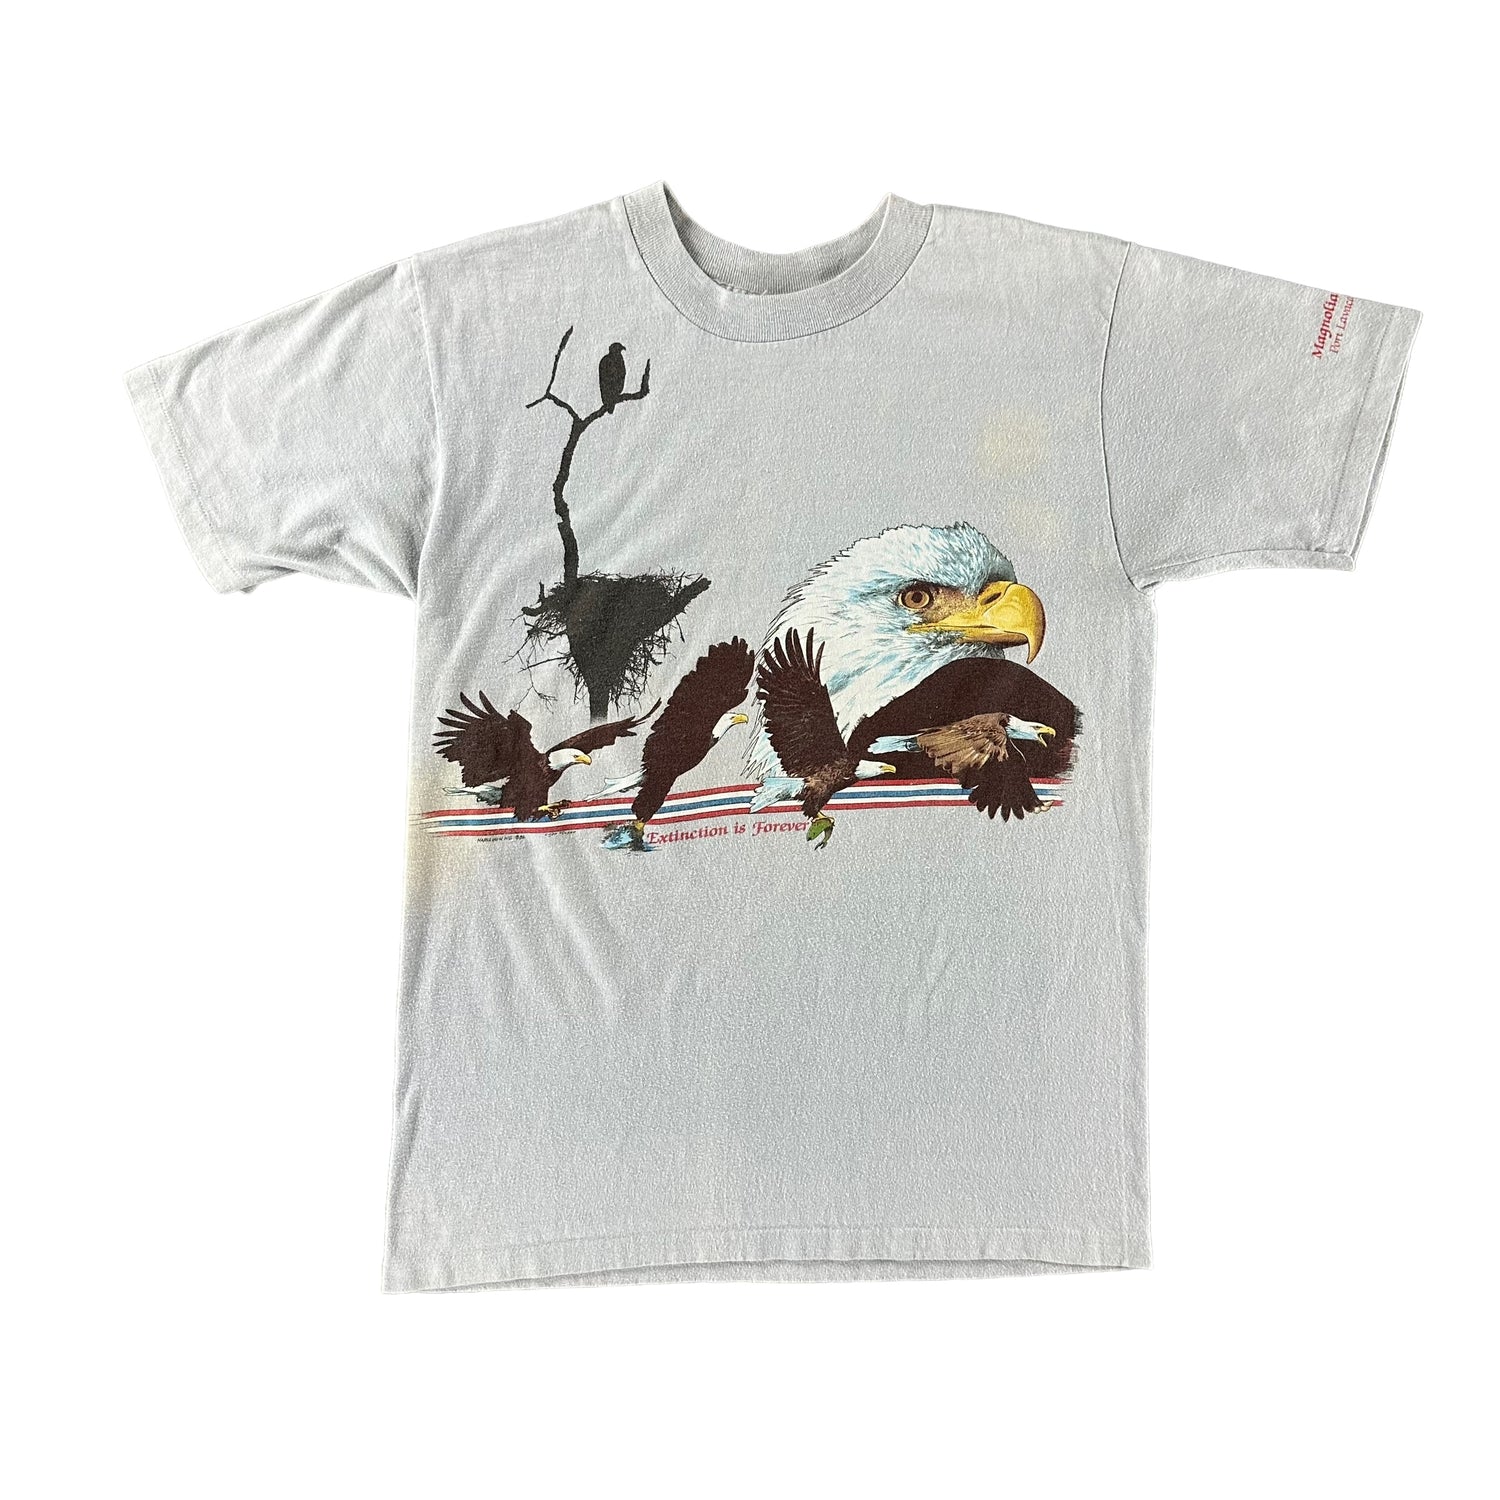 Vintage 1986 Extinction T-shirt size Medium